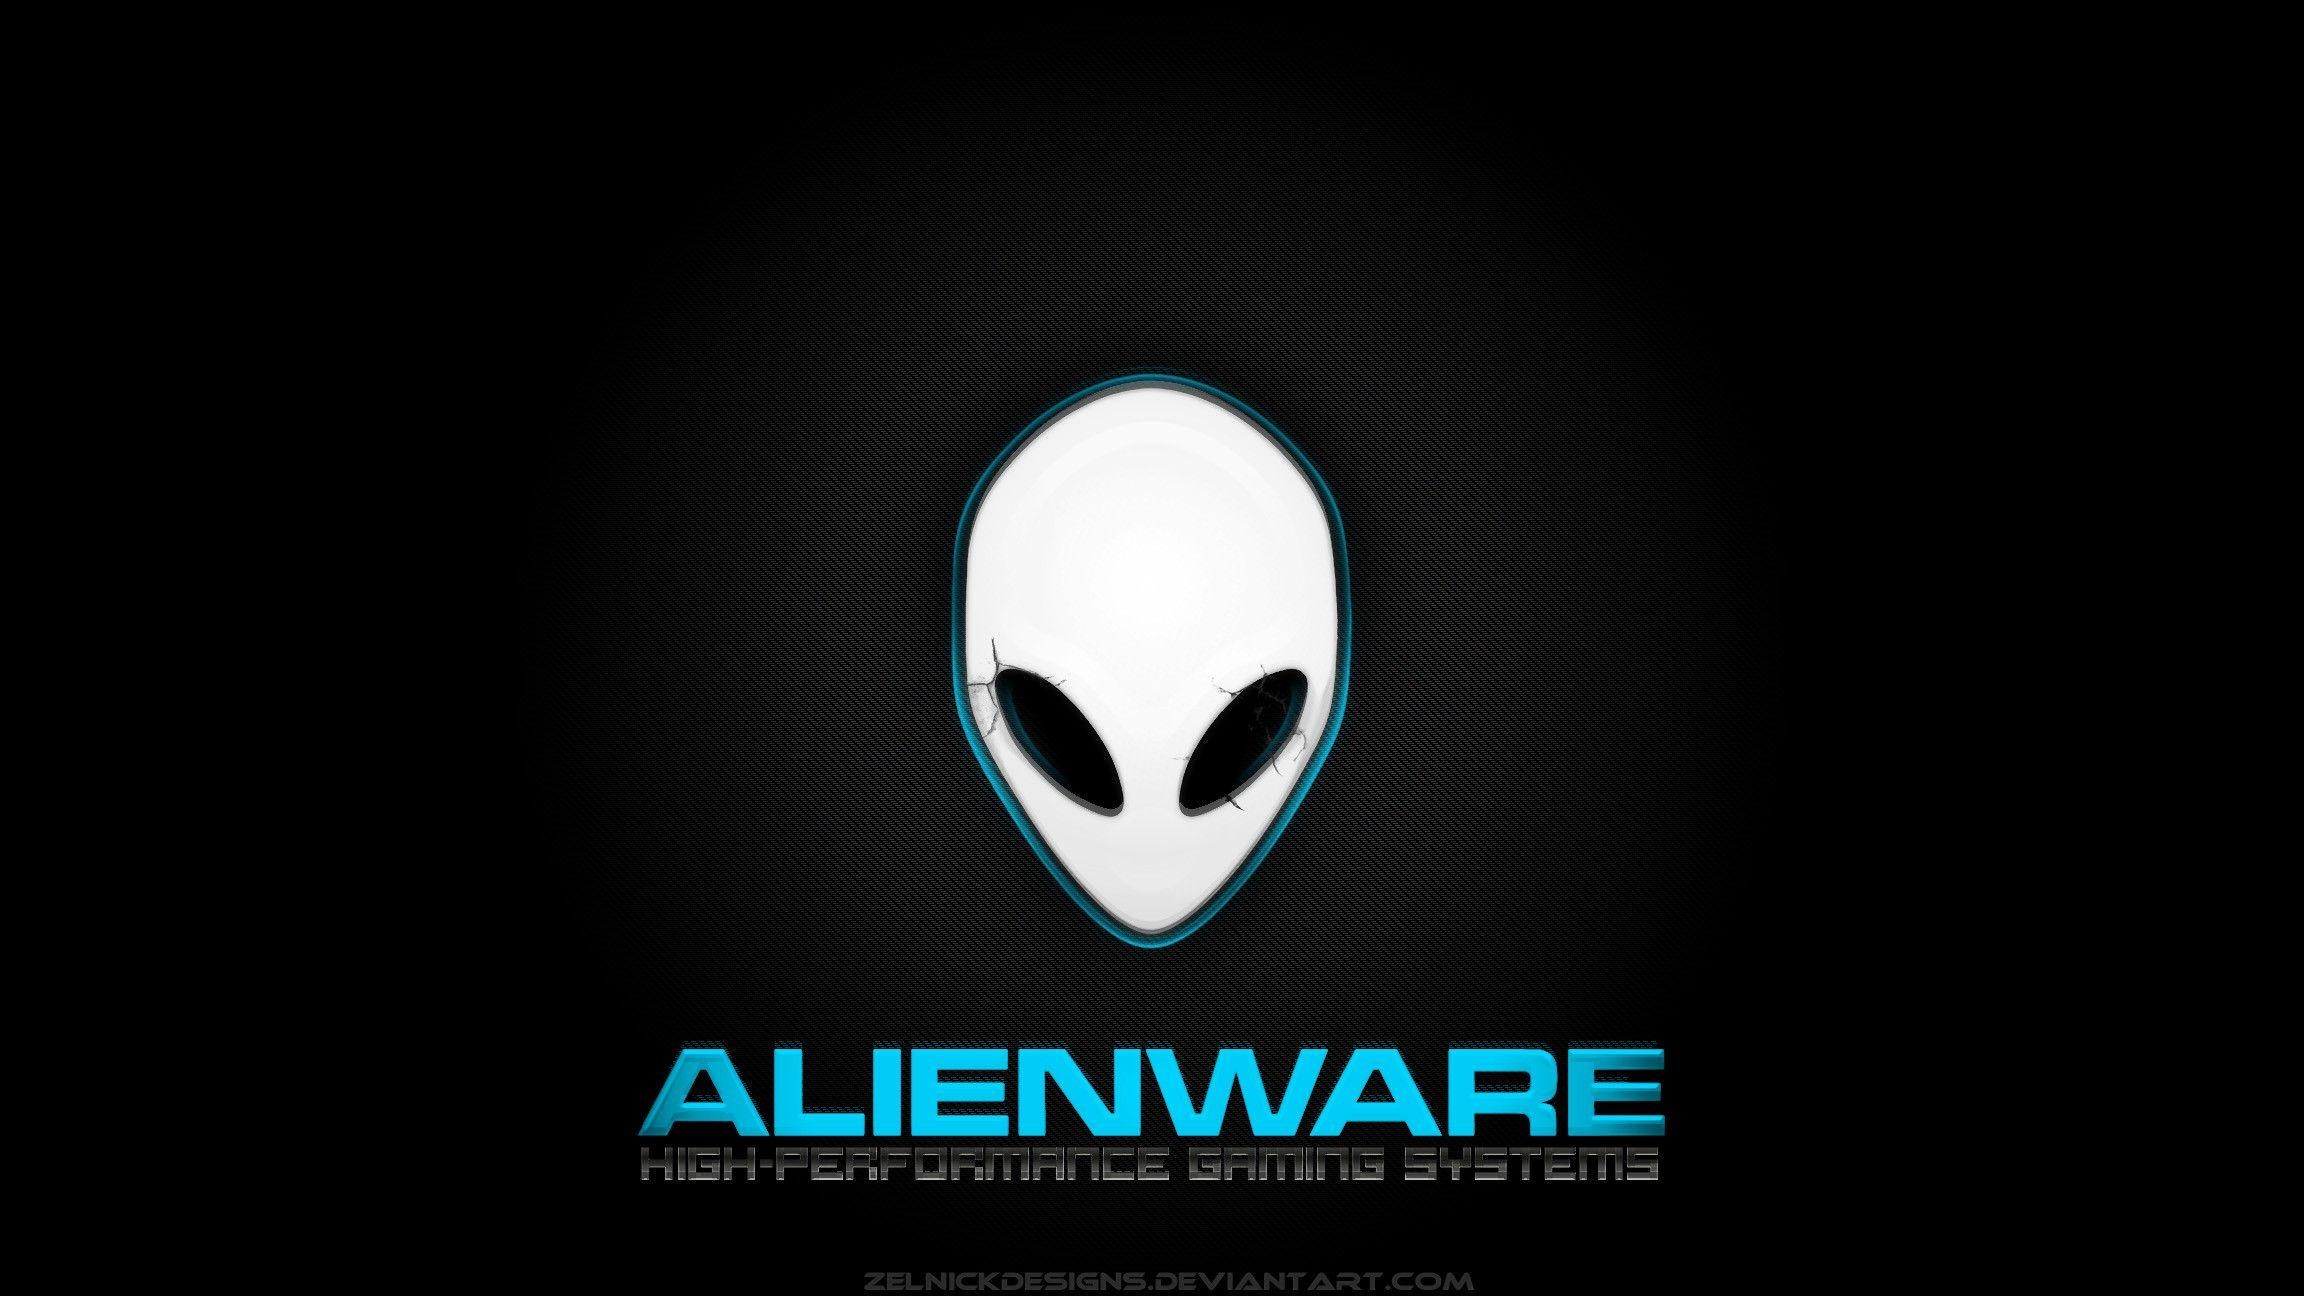 2304x1296 Alienware Live Wallpapers - WallpaperSafari